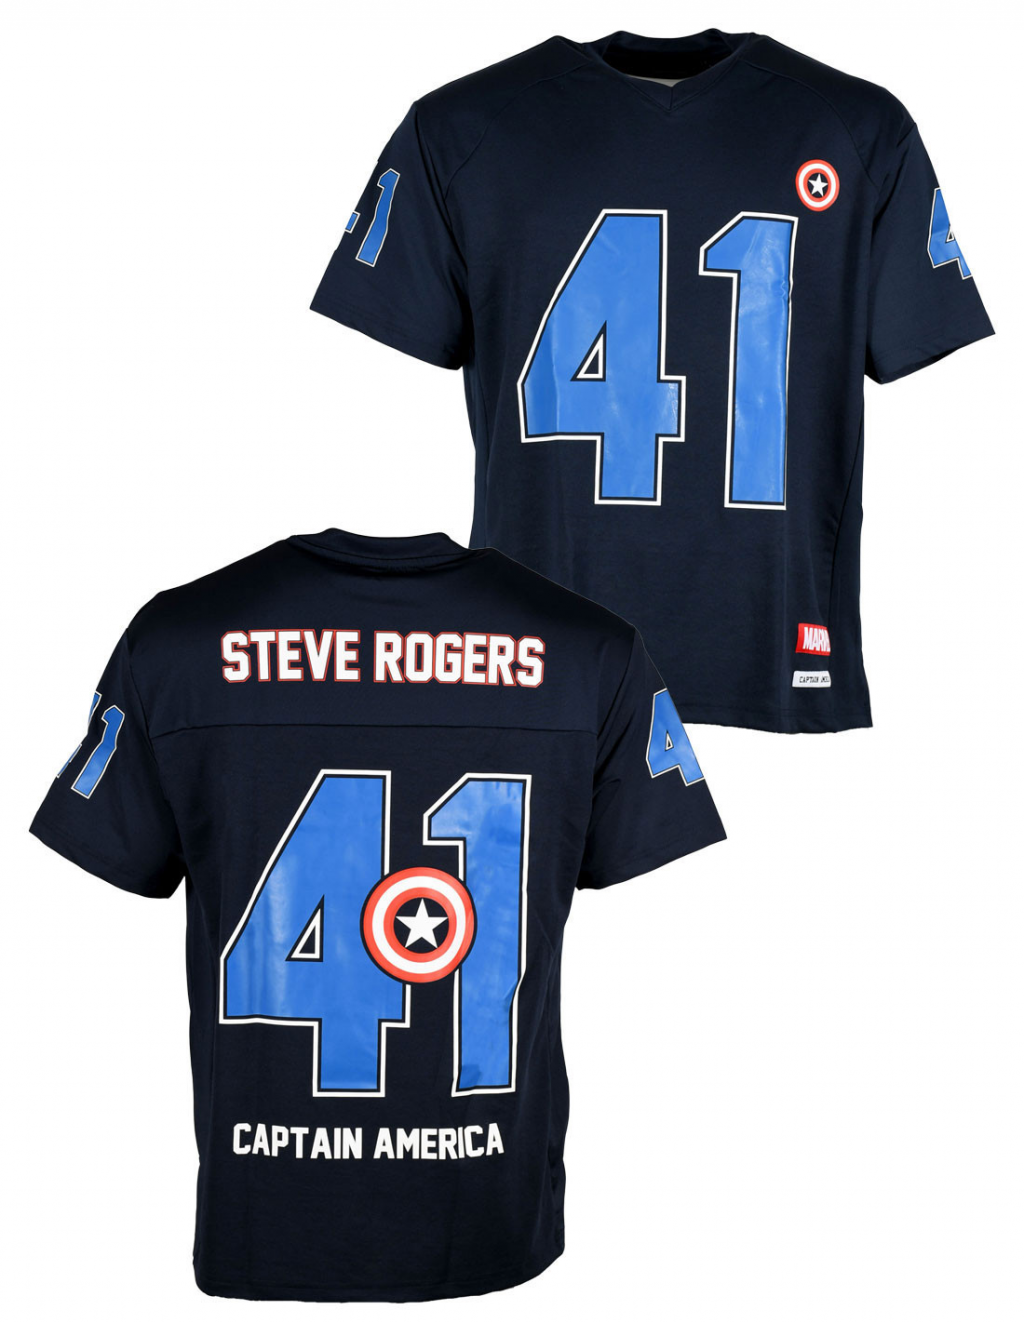 MARVEL - Captain America - T-Shirt Sports US Replica unisex (L)